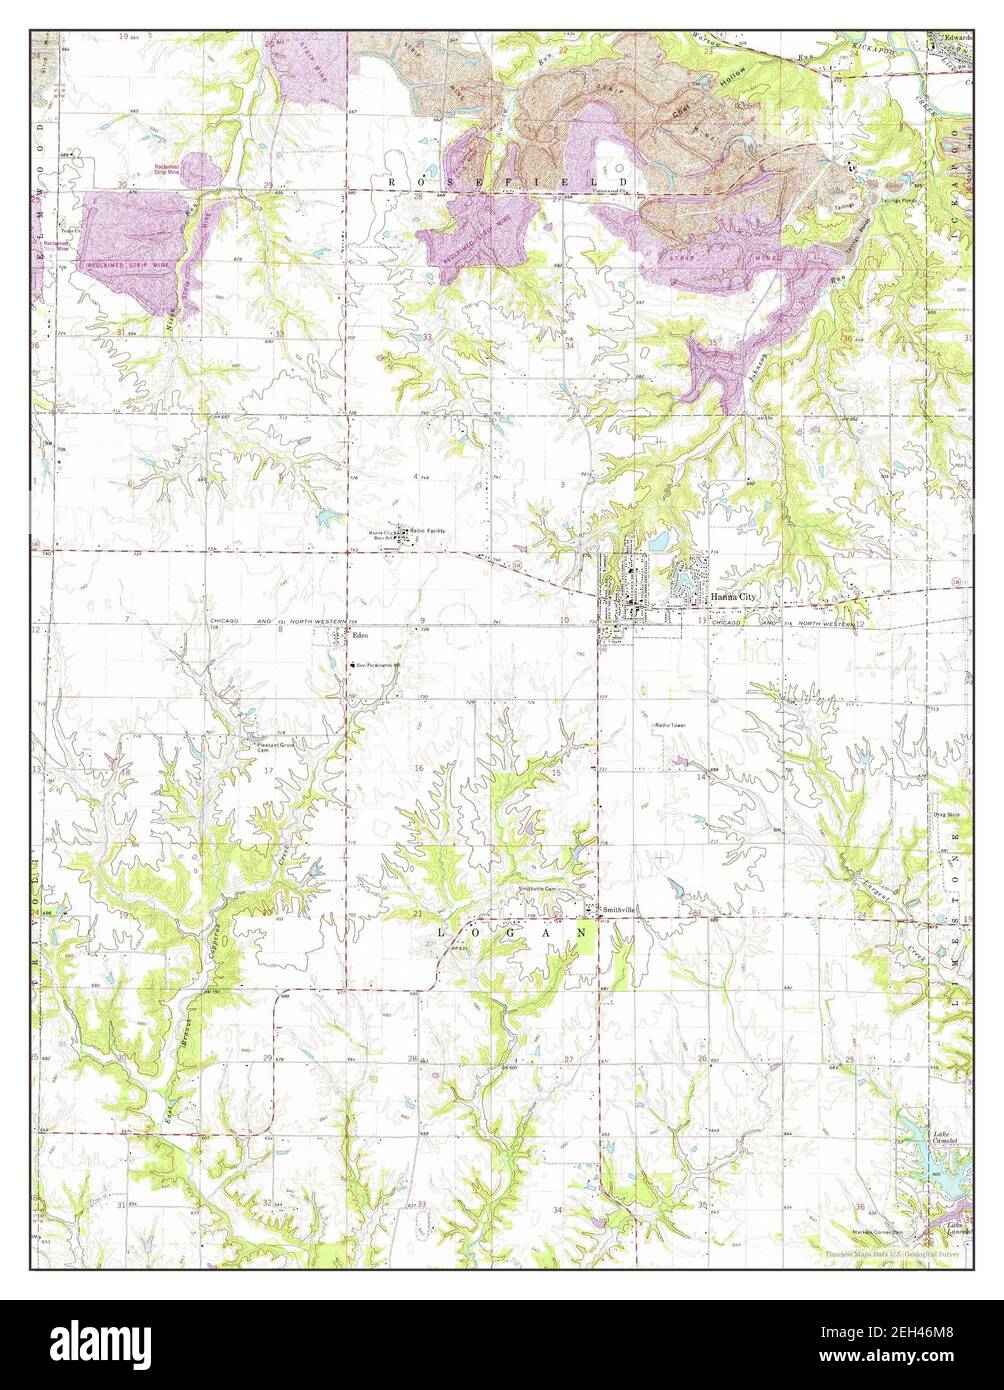 Hanna City, Illinois, map 1971, 1:24000, United States of America by Timeless Maps, data U.S. Geological Survey Stock Photo